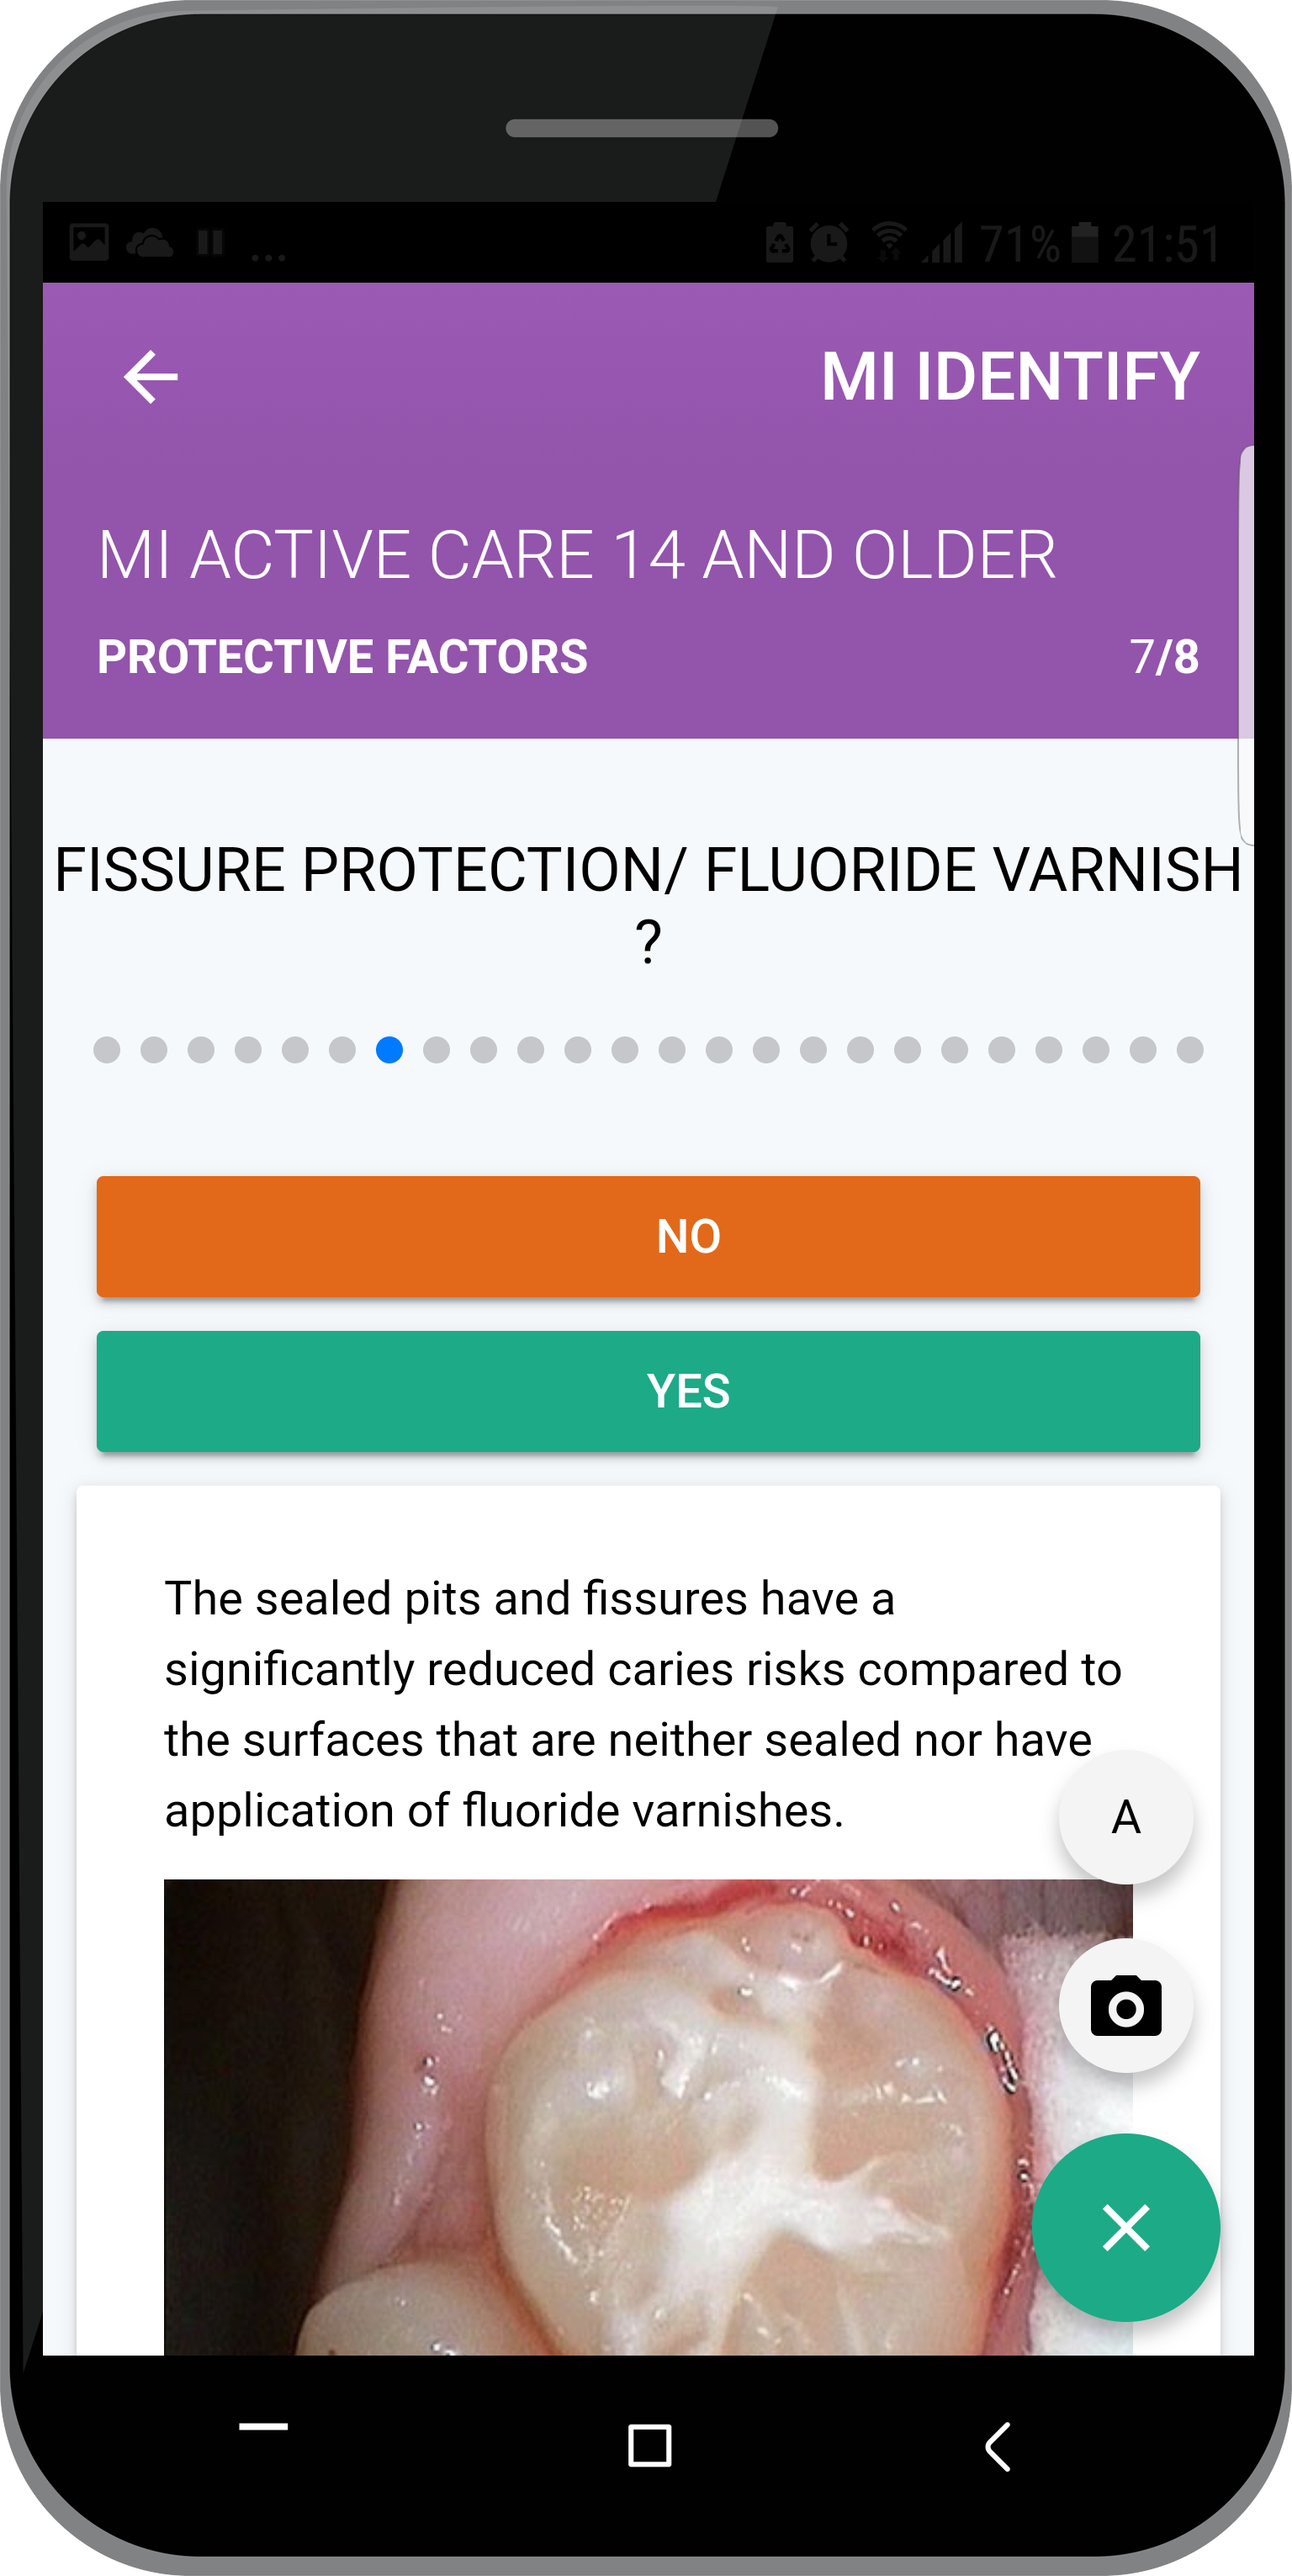 Fissure protection item CRA